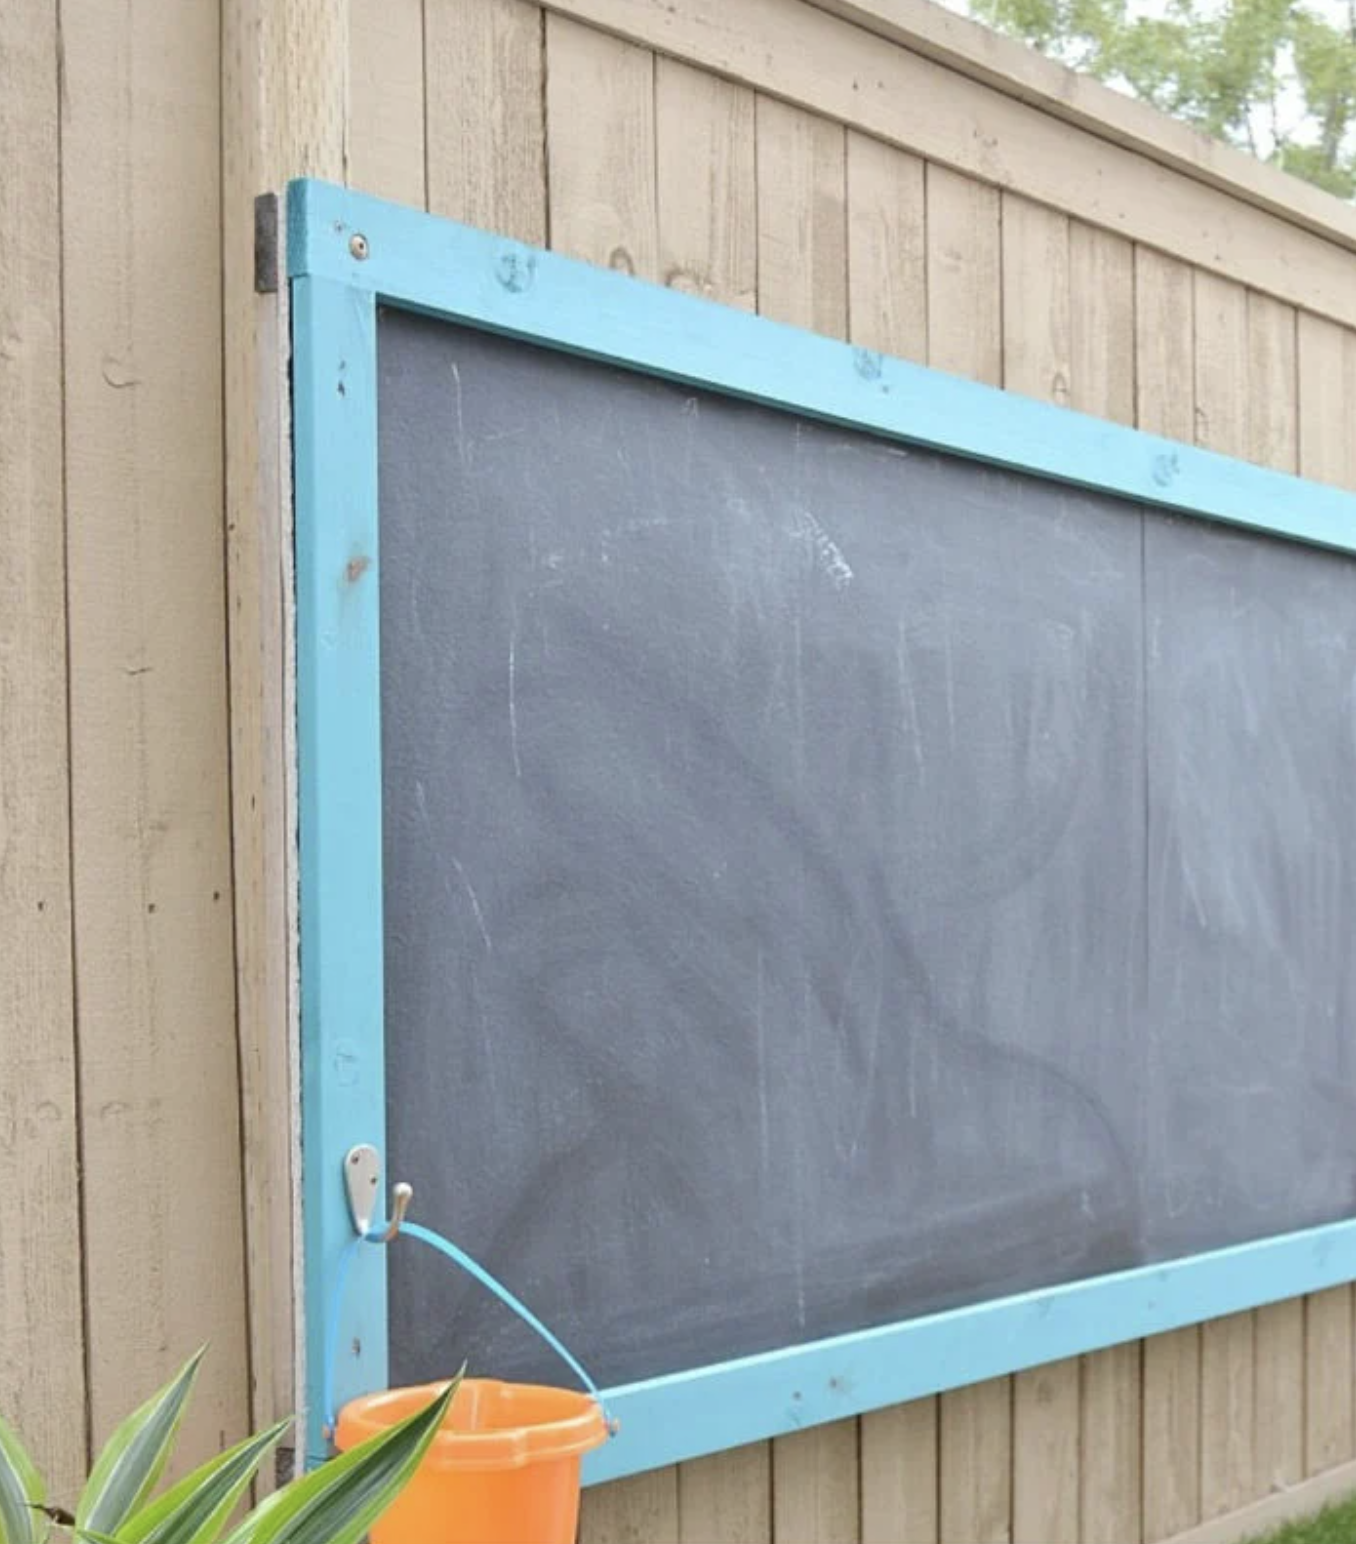 giant chalkboard on a fence